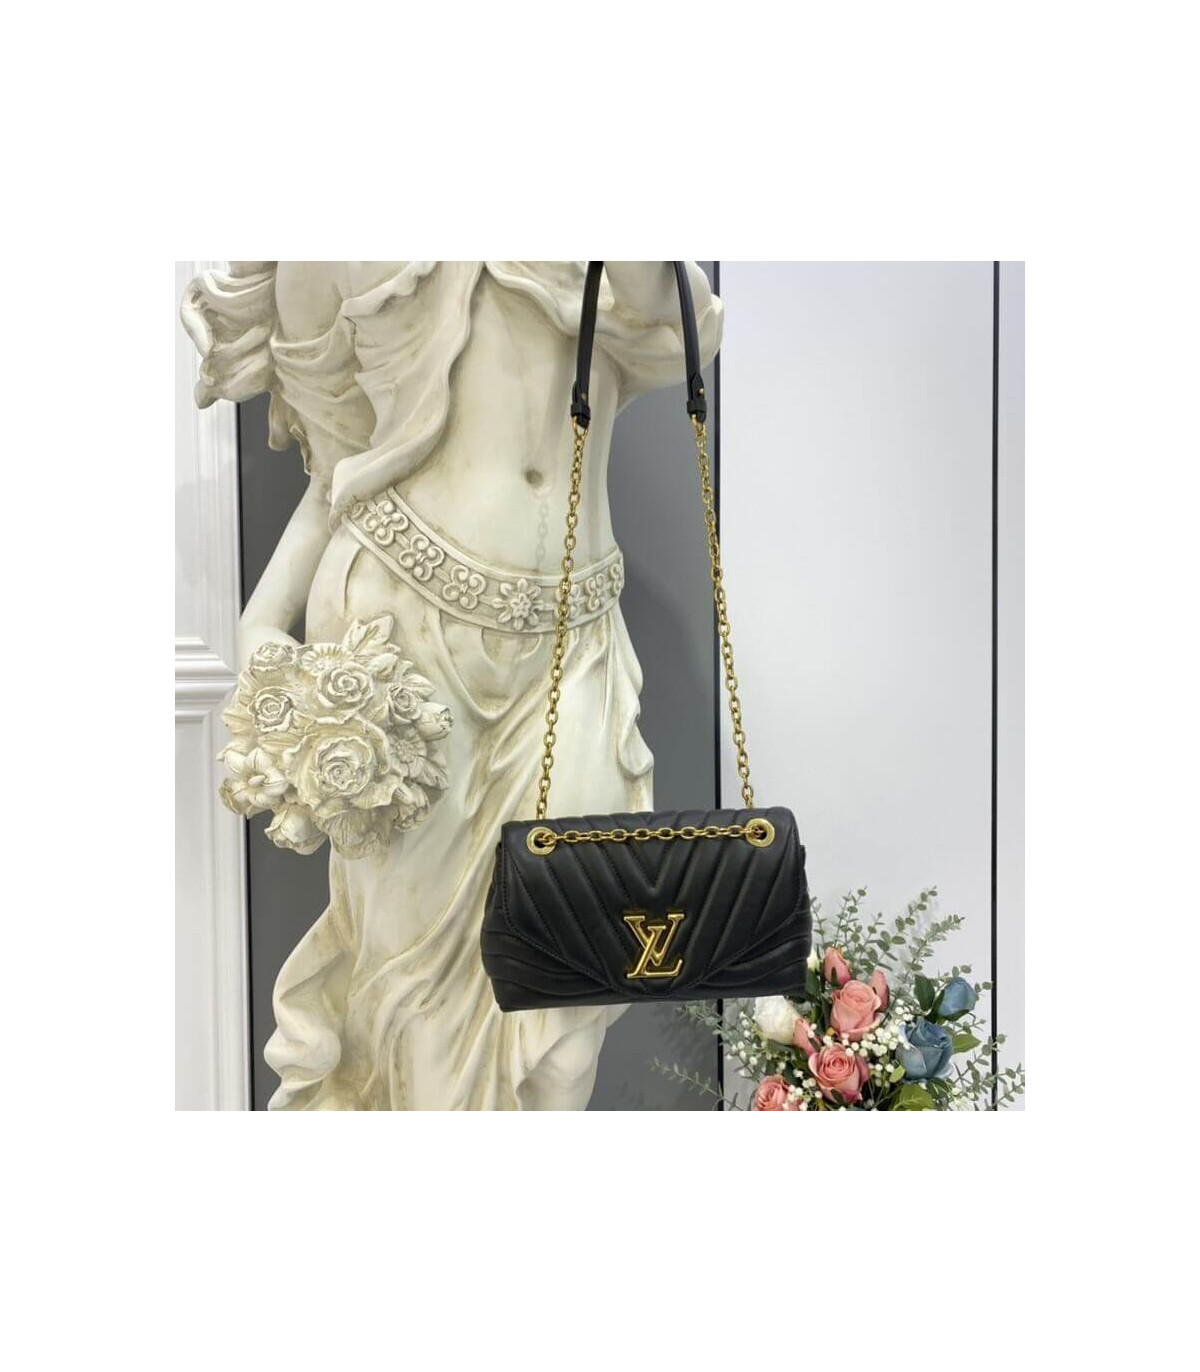 LV New Wave Chain Bag H24 in Black - Handbags M58552, L*V – ZAK BAGS ©️